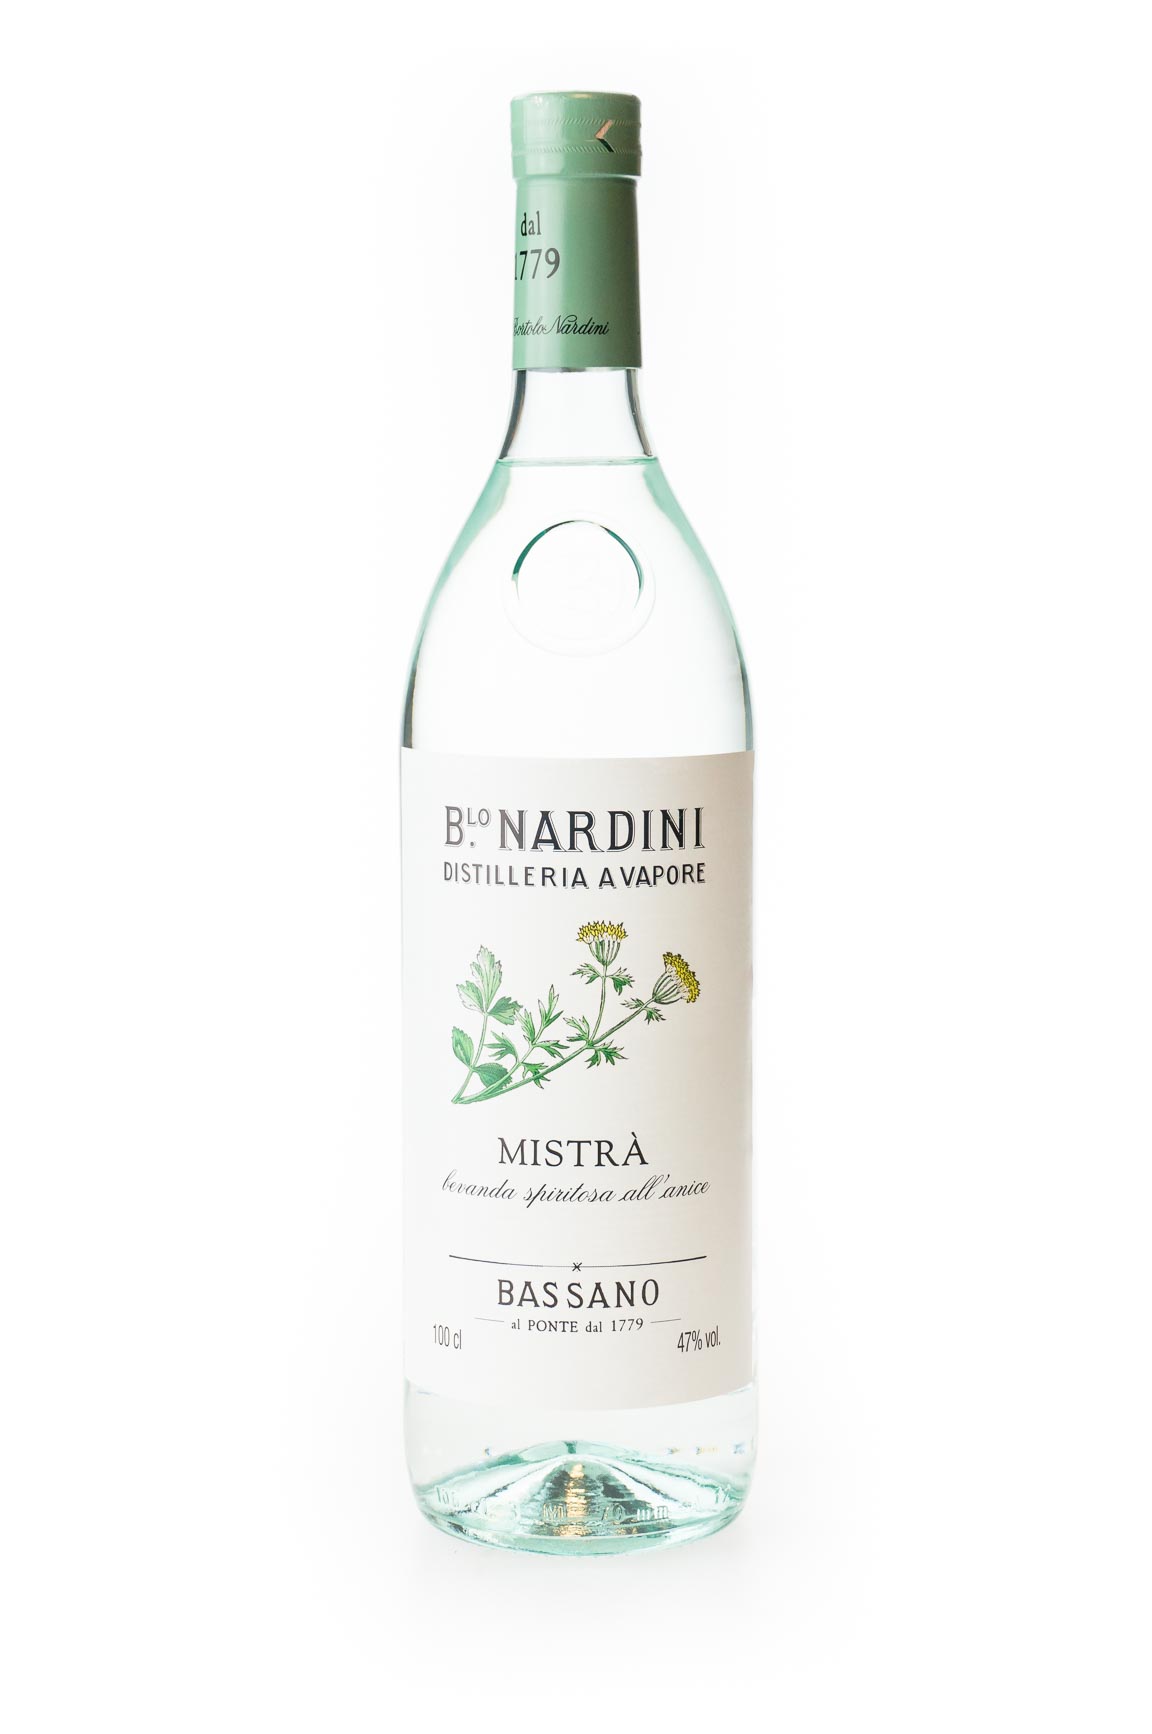 Nardini Mistra - 1 Liter 47% vol